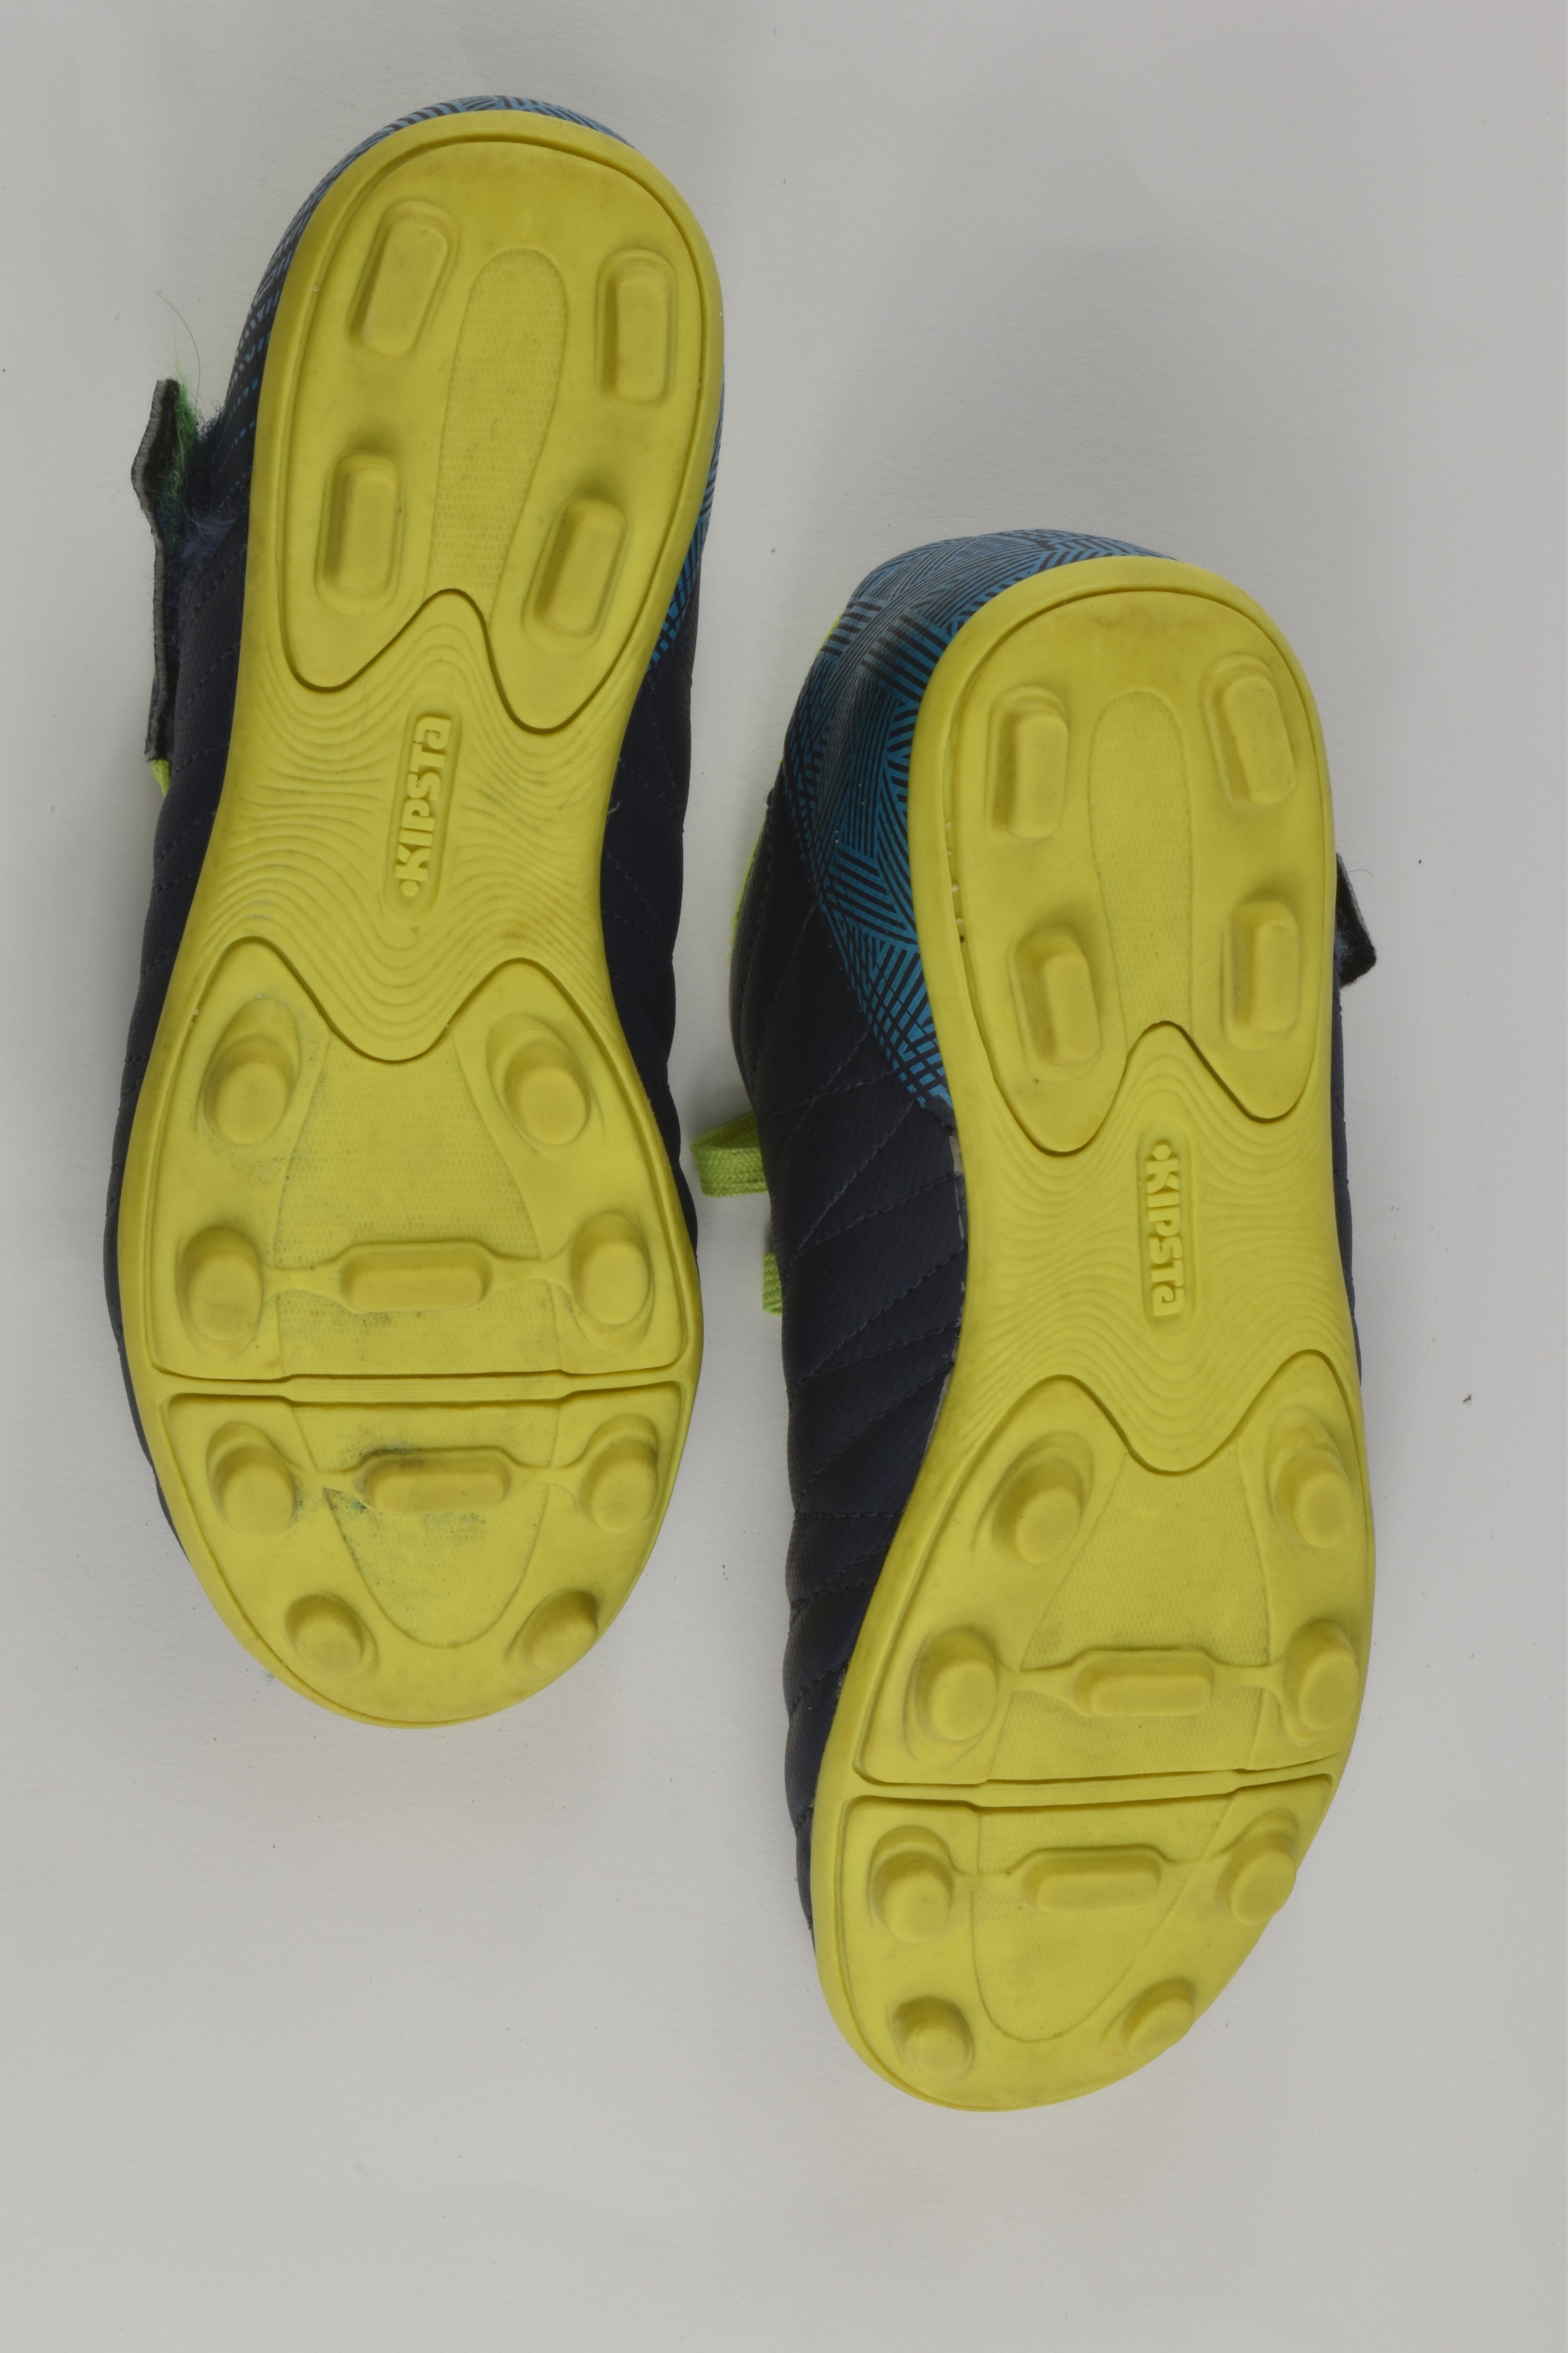 Buy Men's Football Boots Agility 100 FG - Black Online | Decathlon